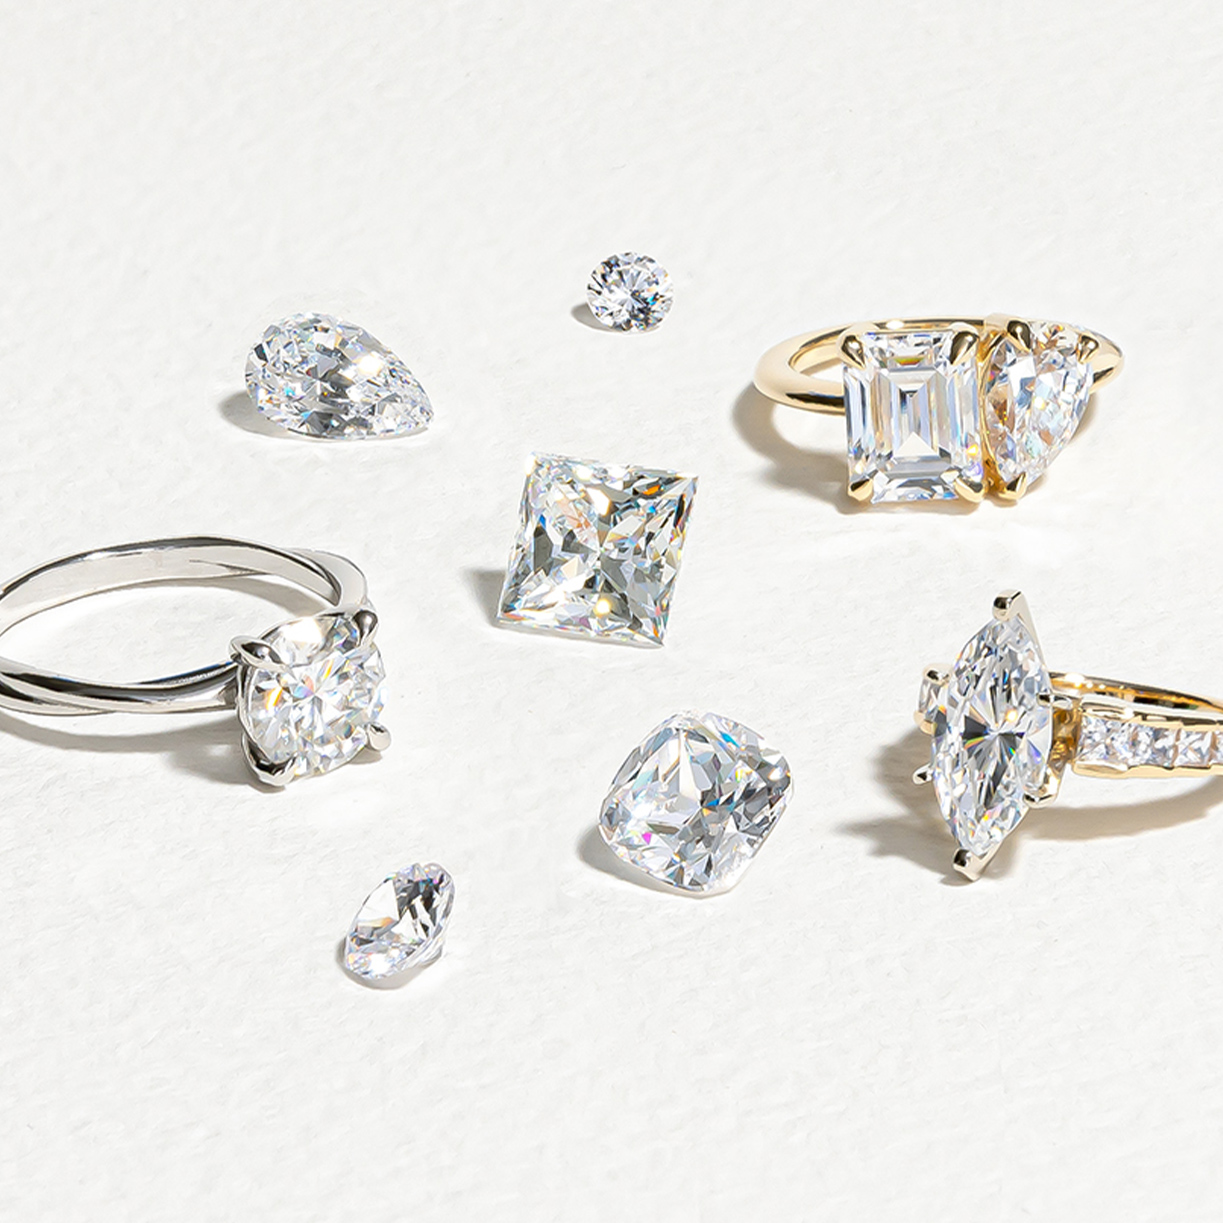 The stylish choice: Salt-and-pepper diamonds